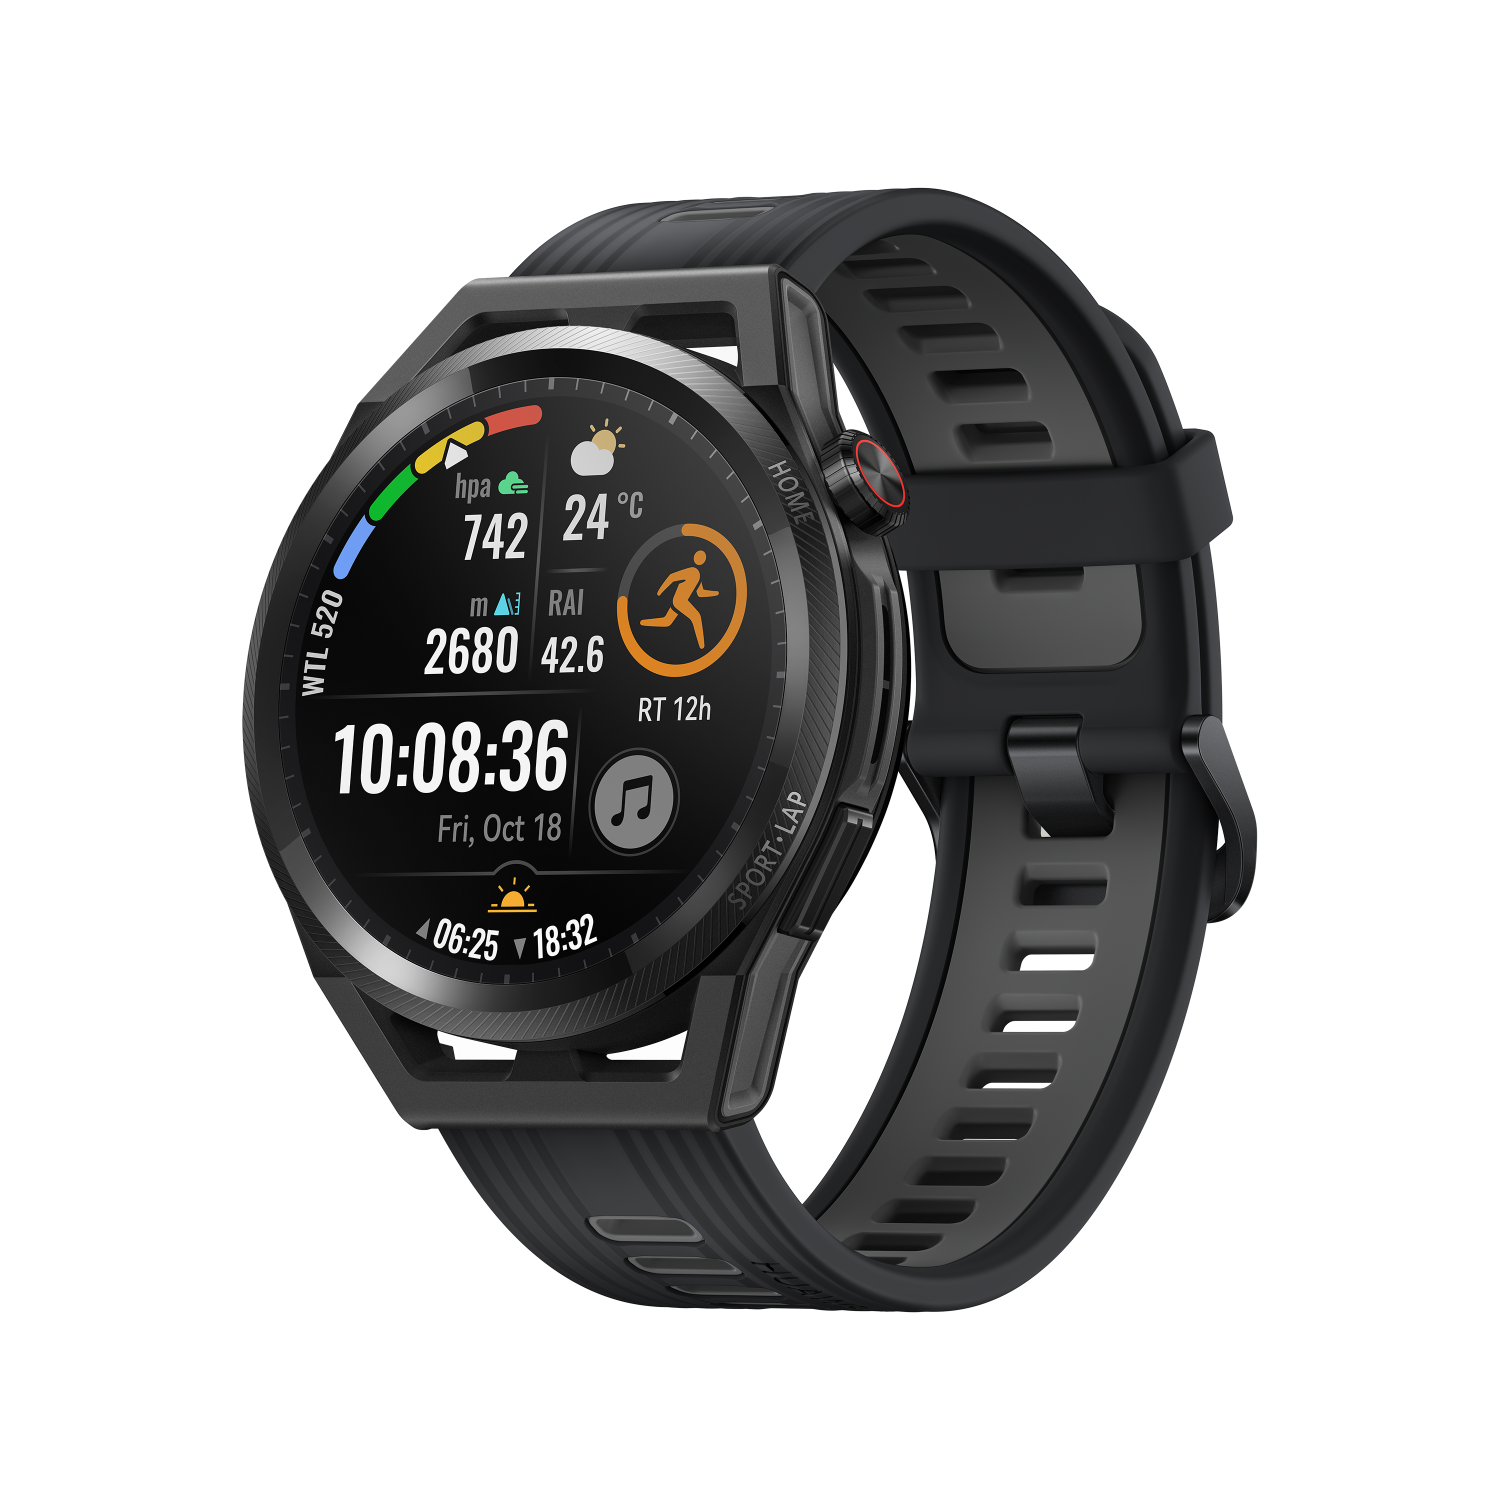 Huawei Watch GT Runner černá